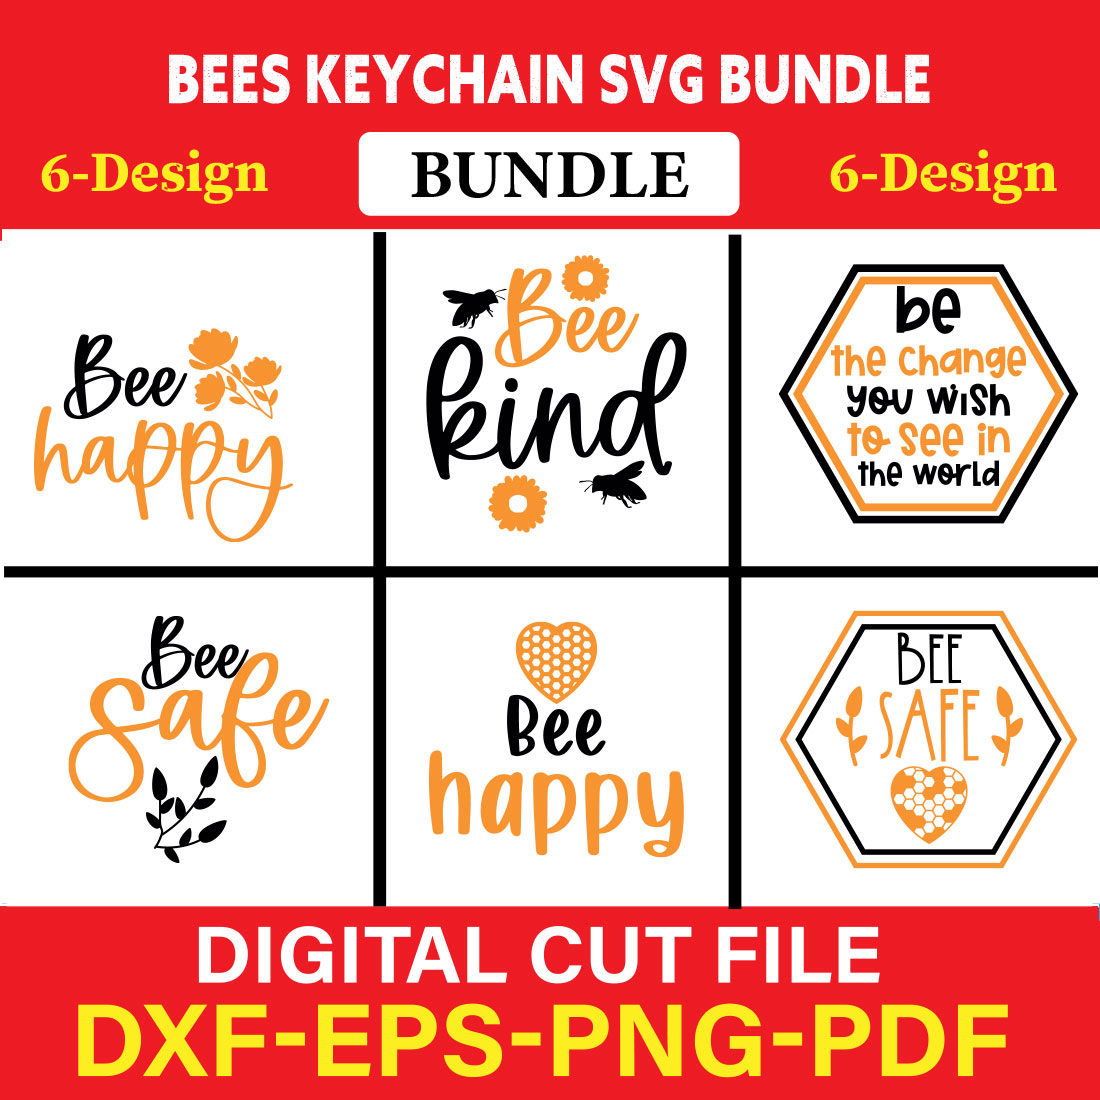 Bees Keychain T-shirt Design Bundle Vol-1 cover image.